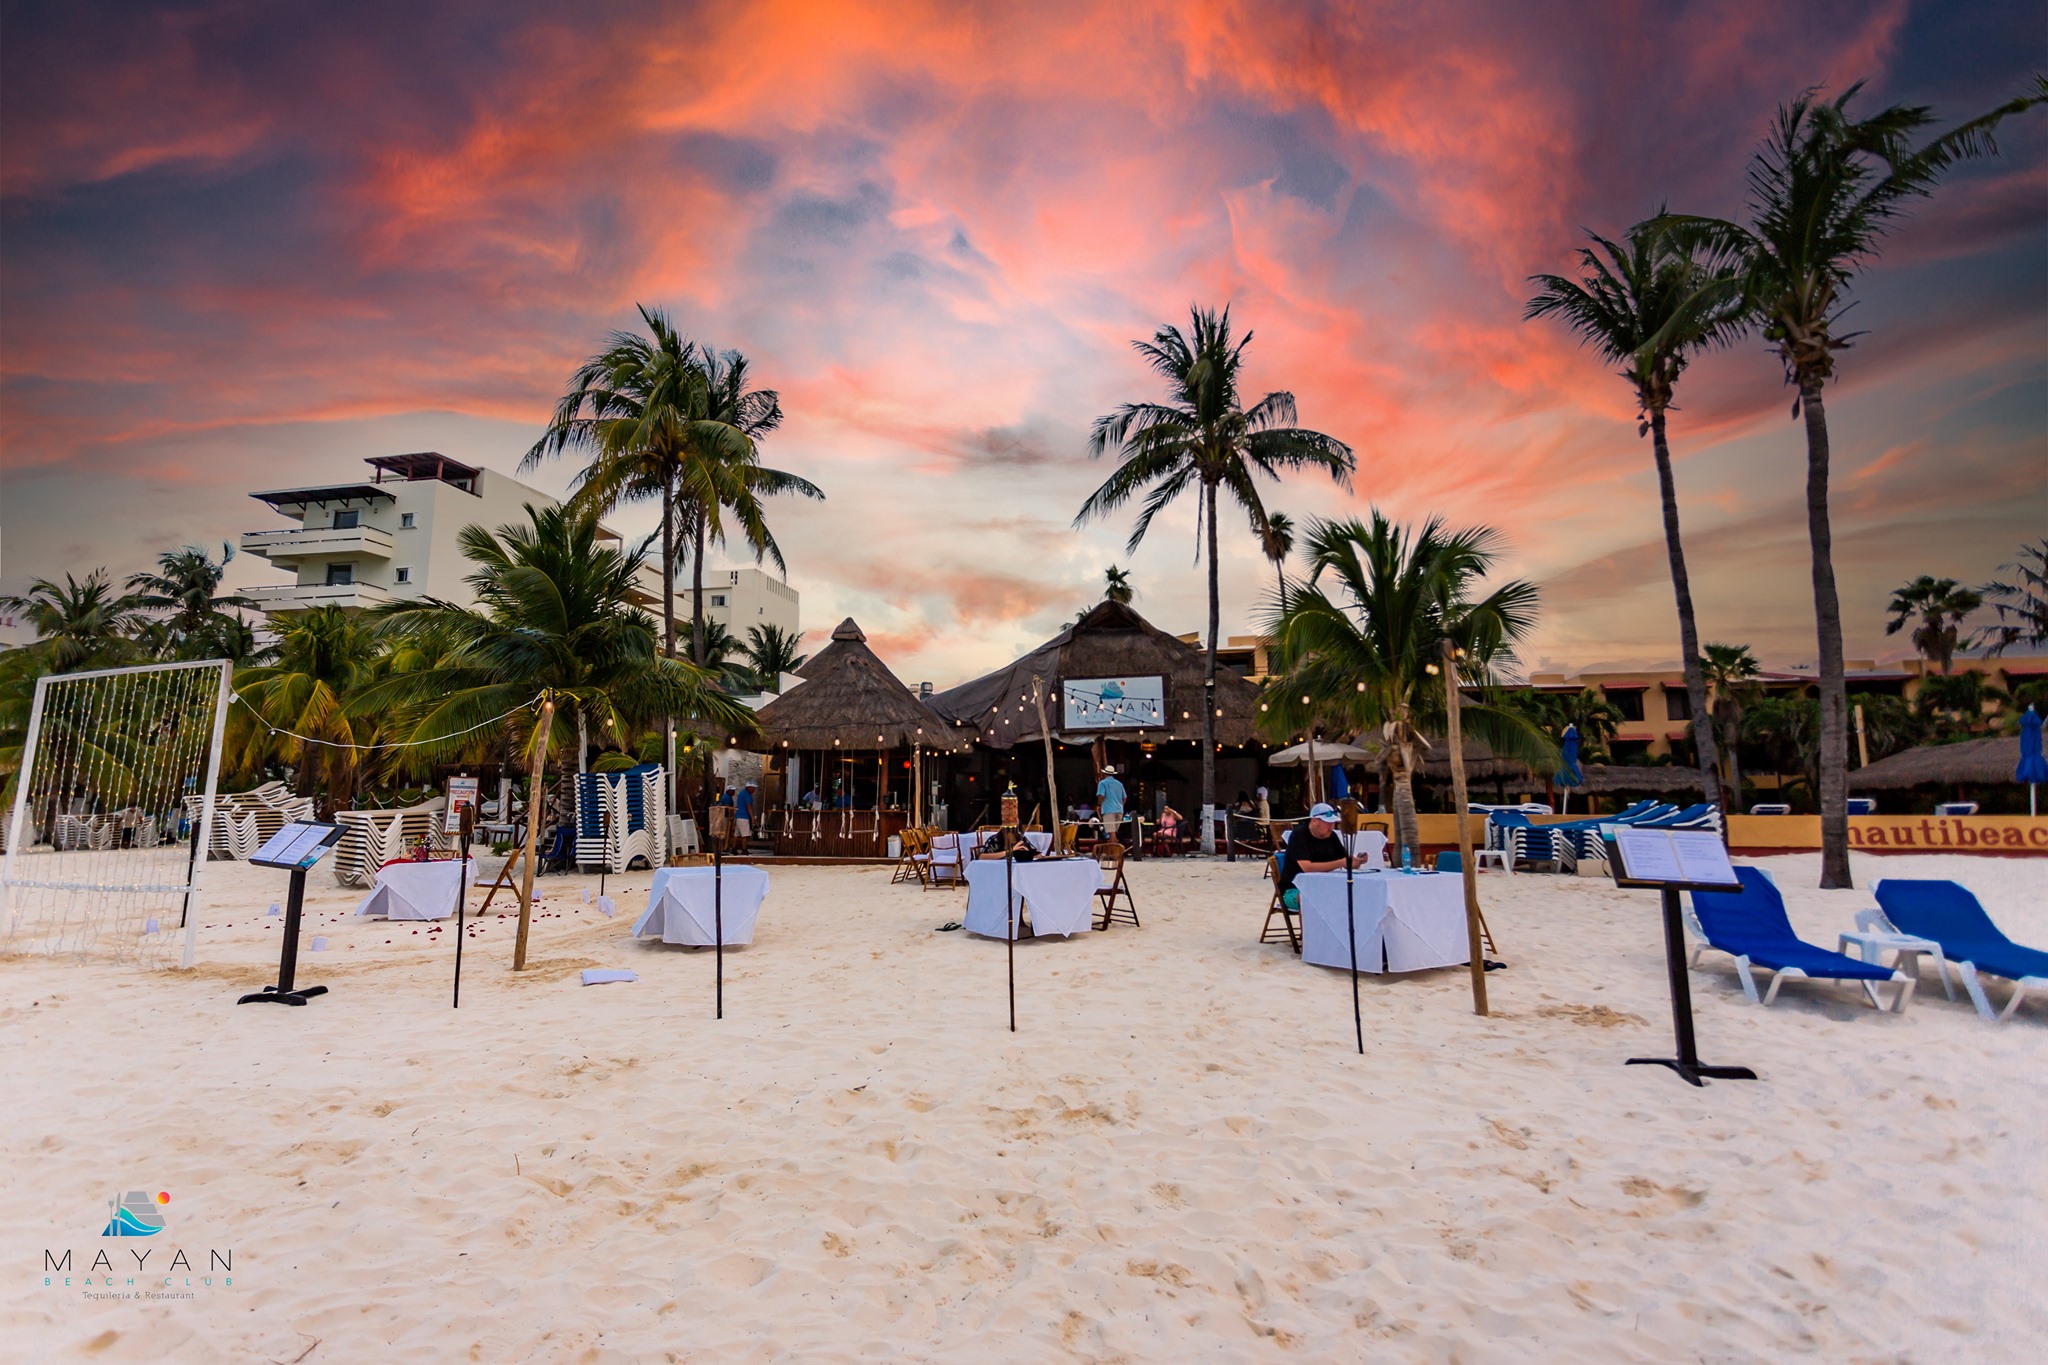 Mayan Beach Club Restaurant & Tequileria - Isla Mujeres